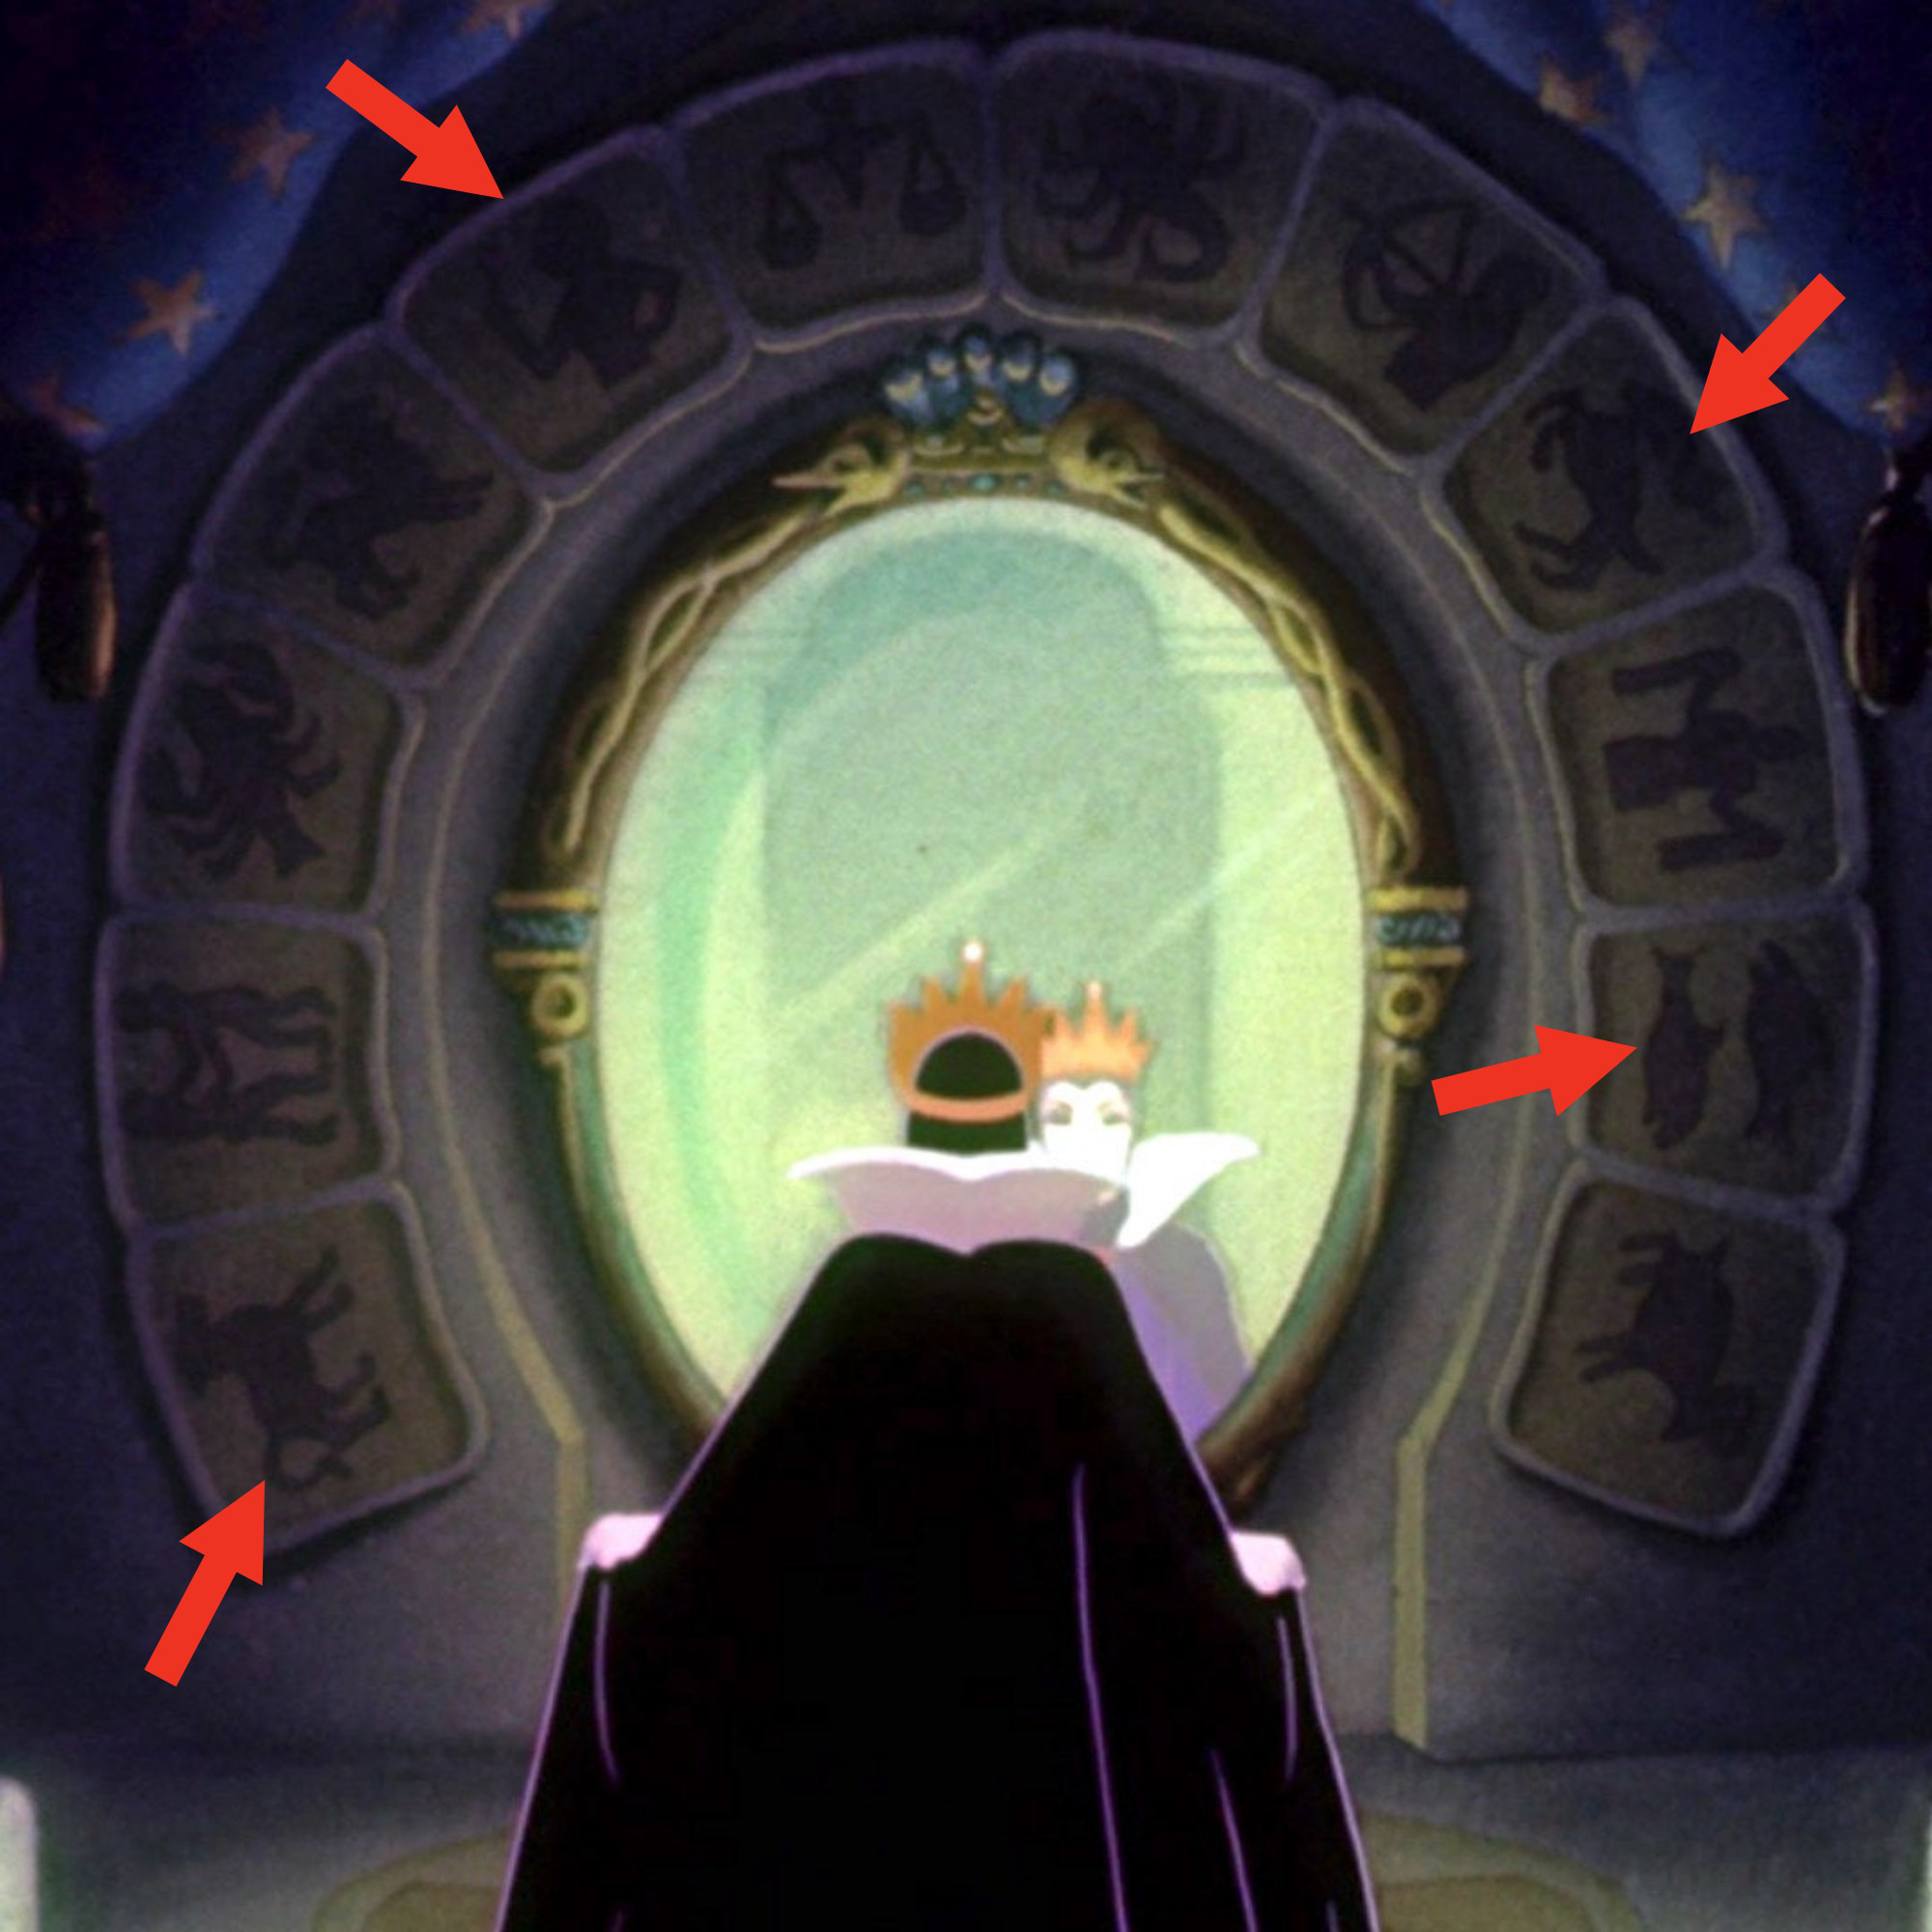 Zodiac signs surrounding the magic mirror